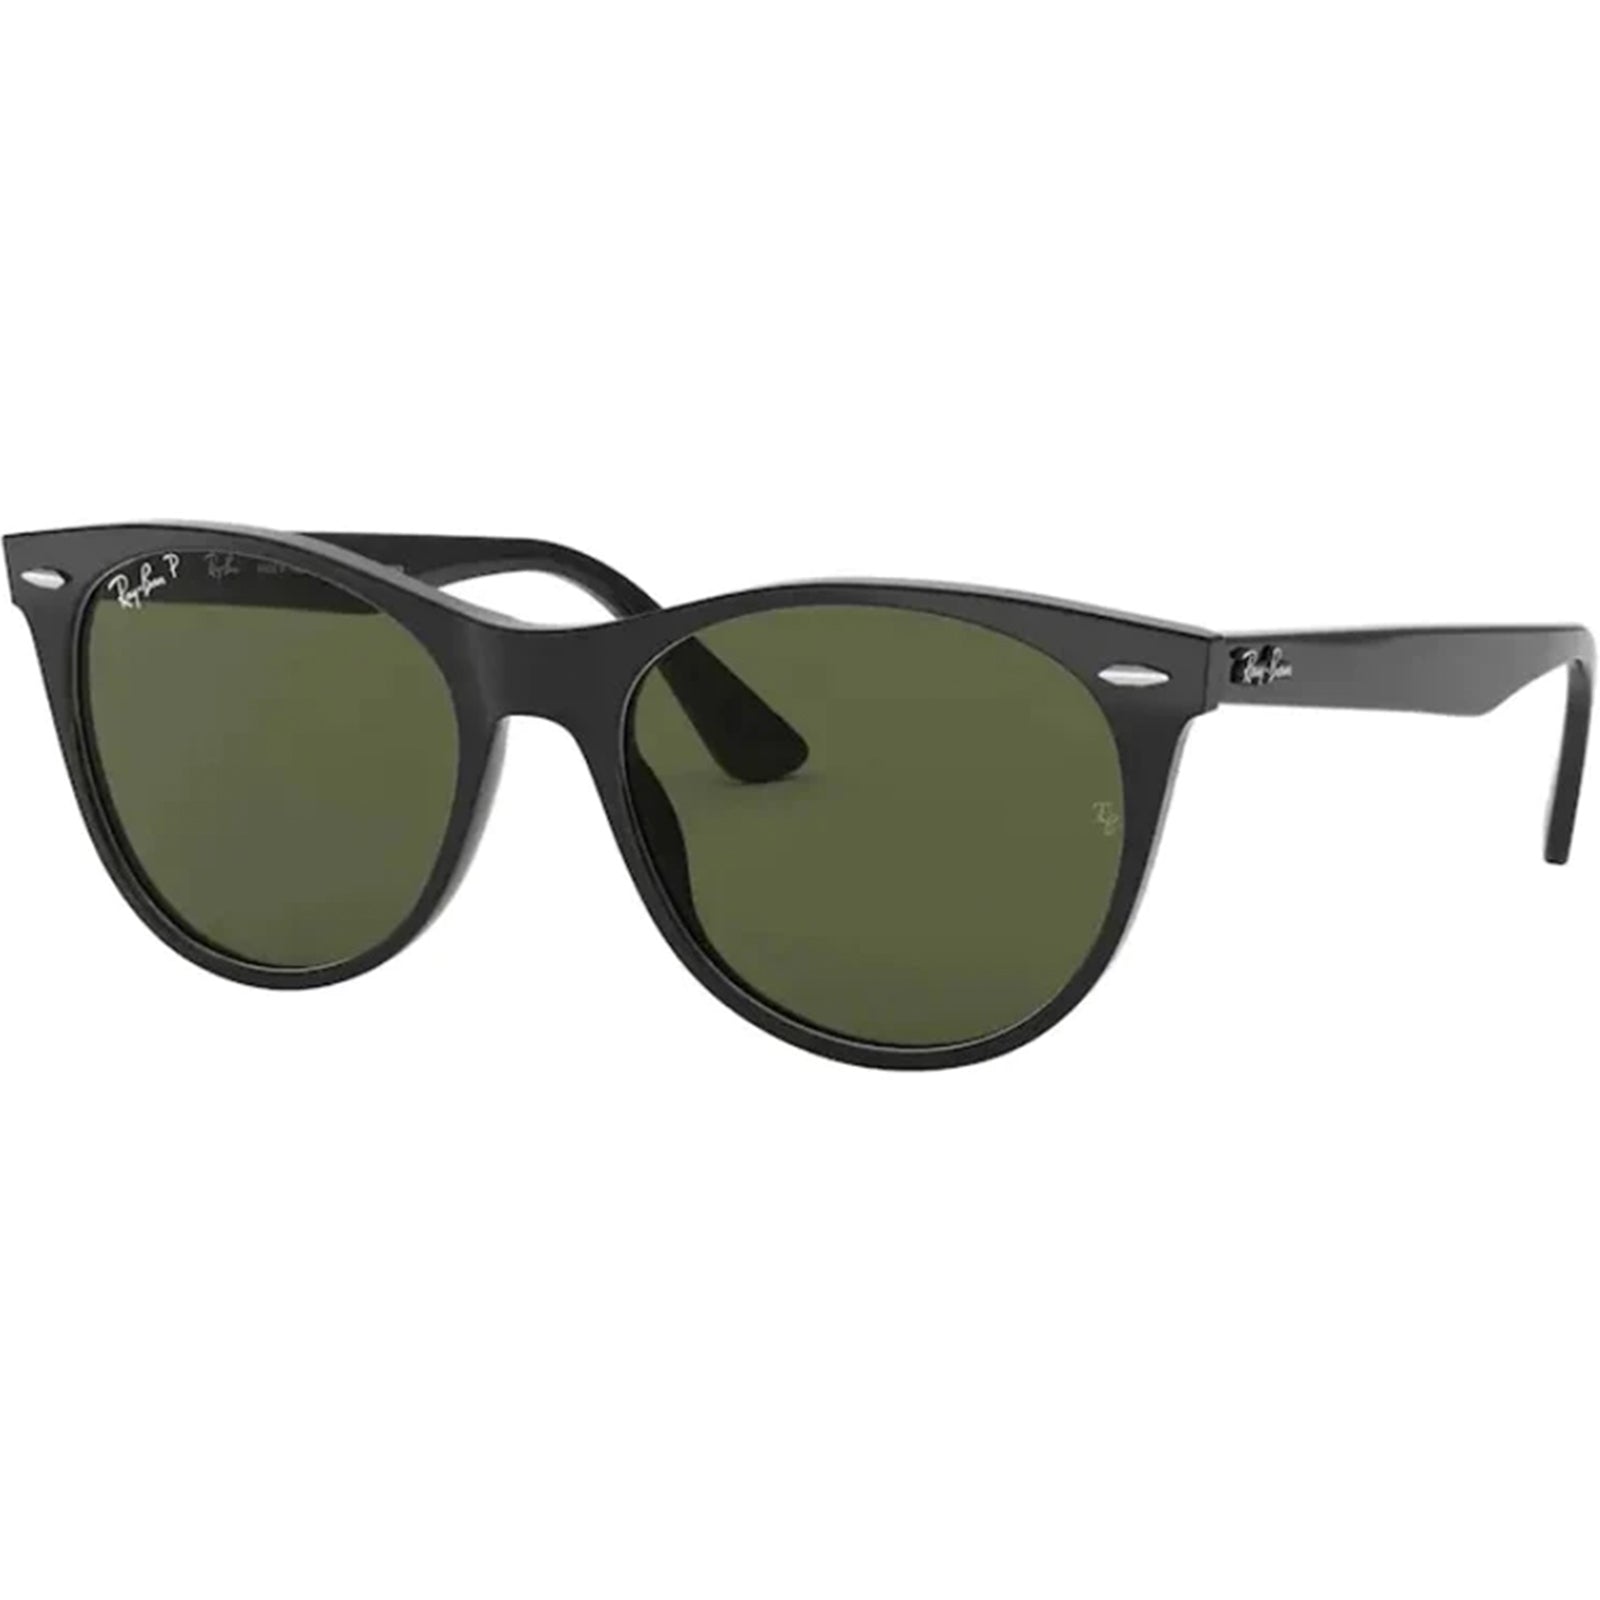 Ray-Ban Wayfarer II Classic Adult Lifestyle Polarized Sunglasses-0RB2185